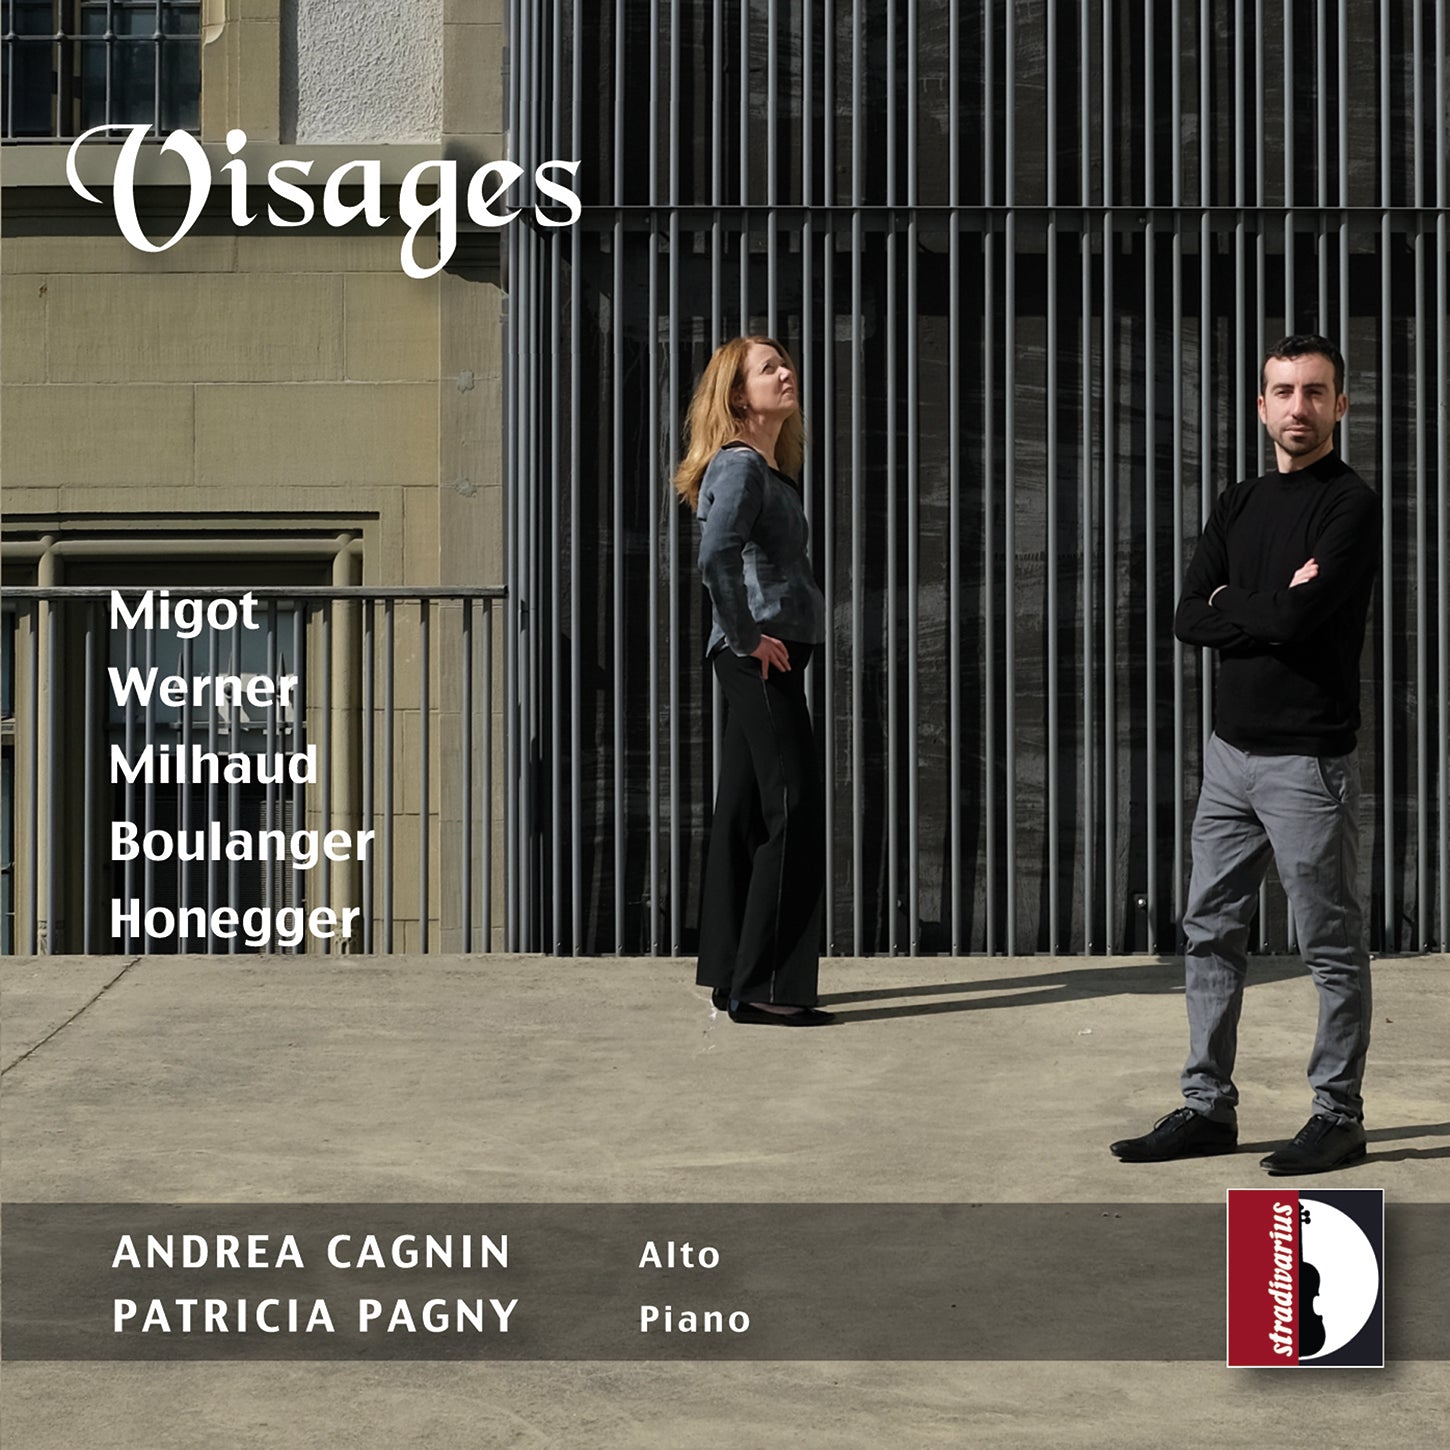 Visages / Andrea Cagnin, Patricia Pagny